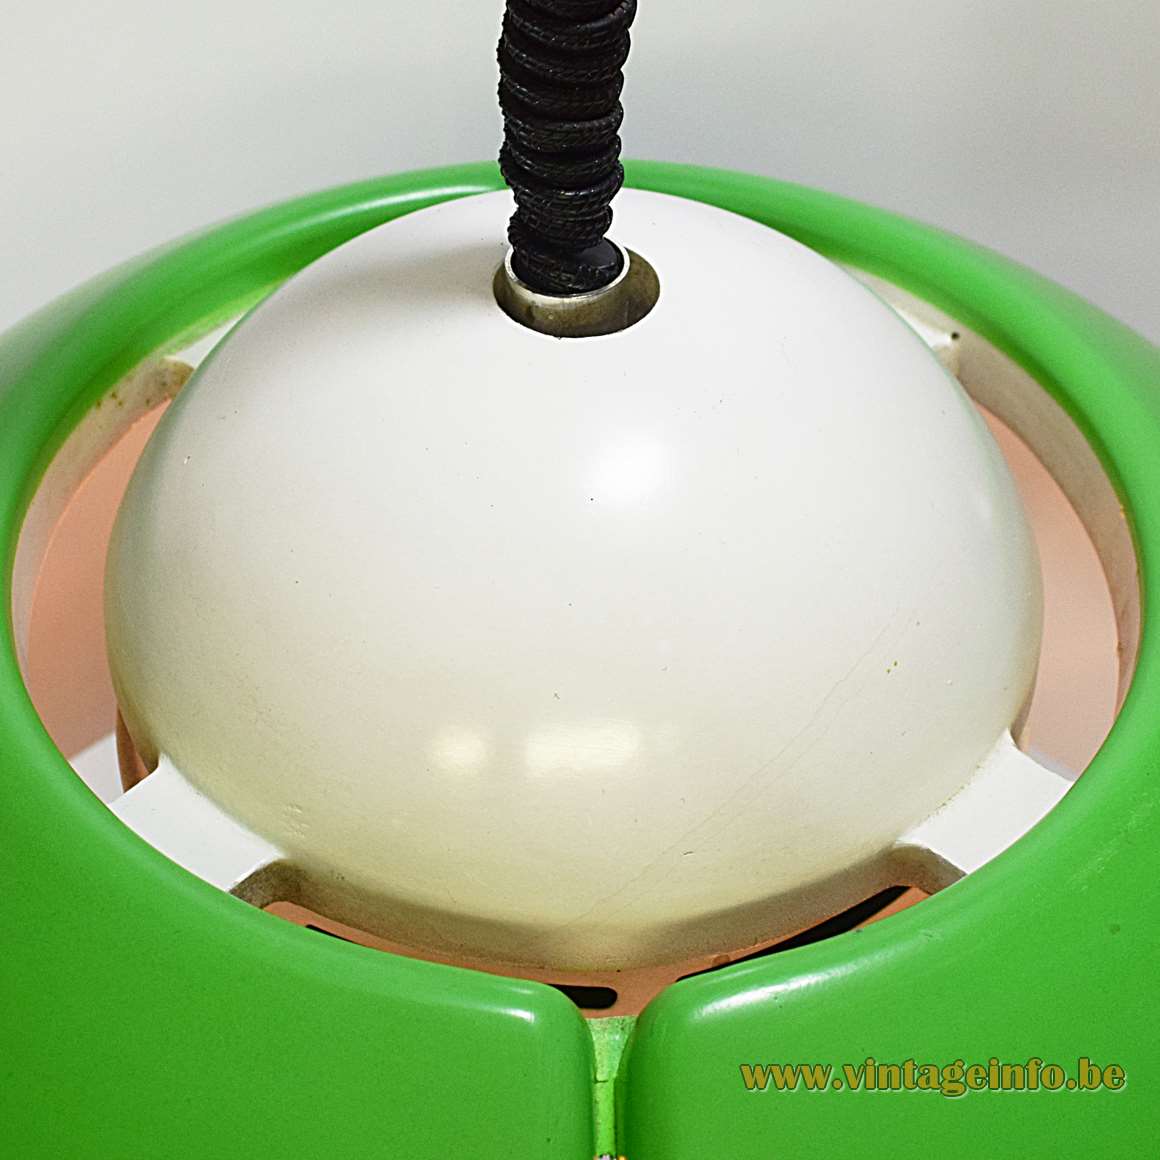 Temde-Leuchten Pendant Lamp big green/white polyester light rise & fall mechanism 4 sockets 1970s